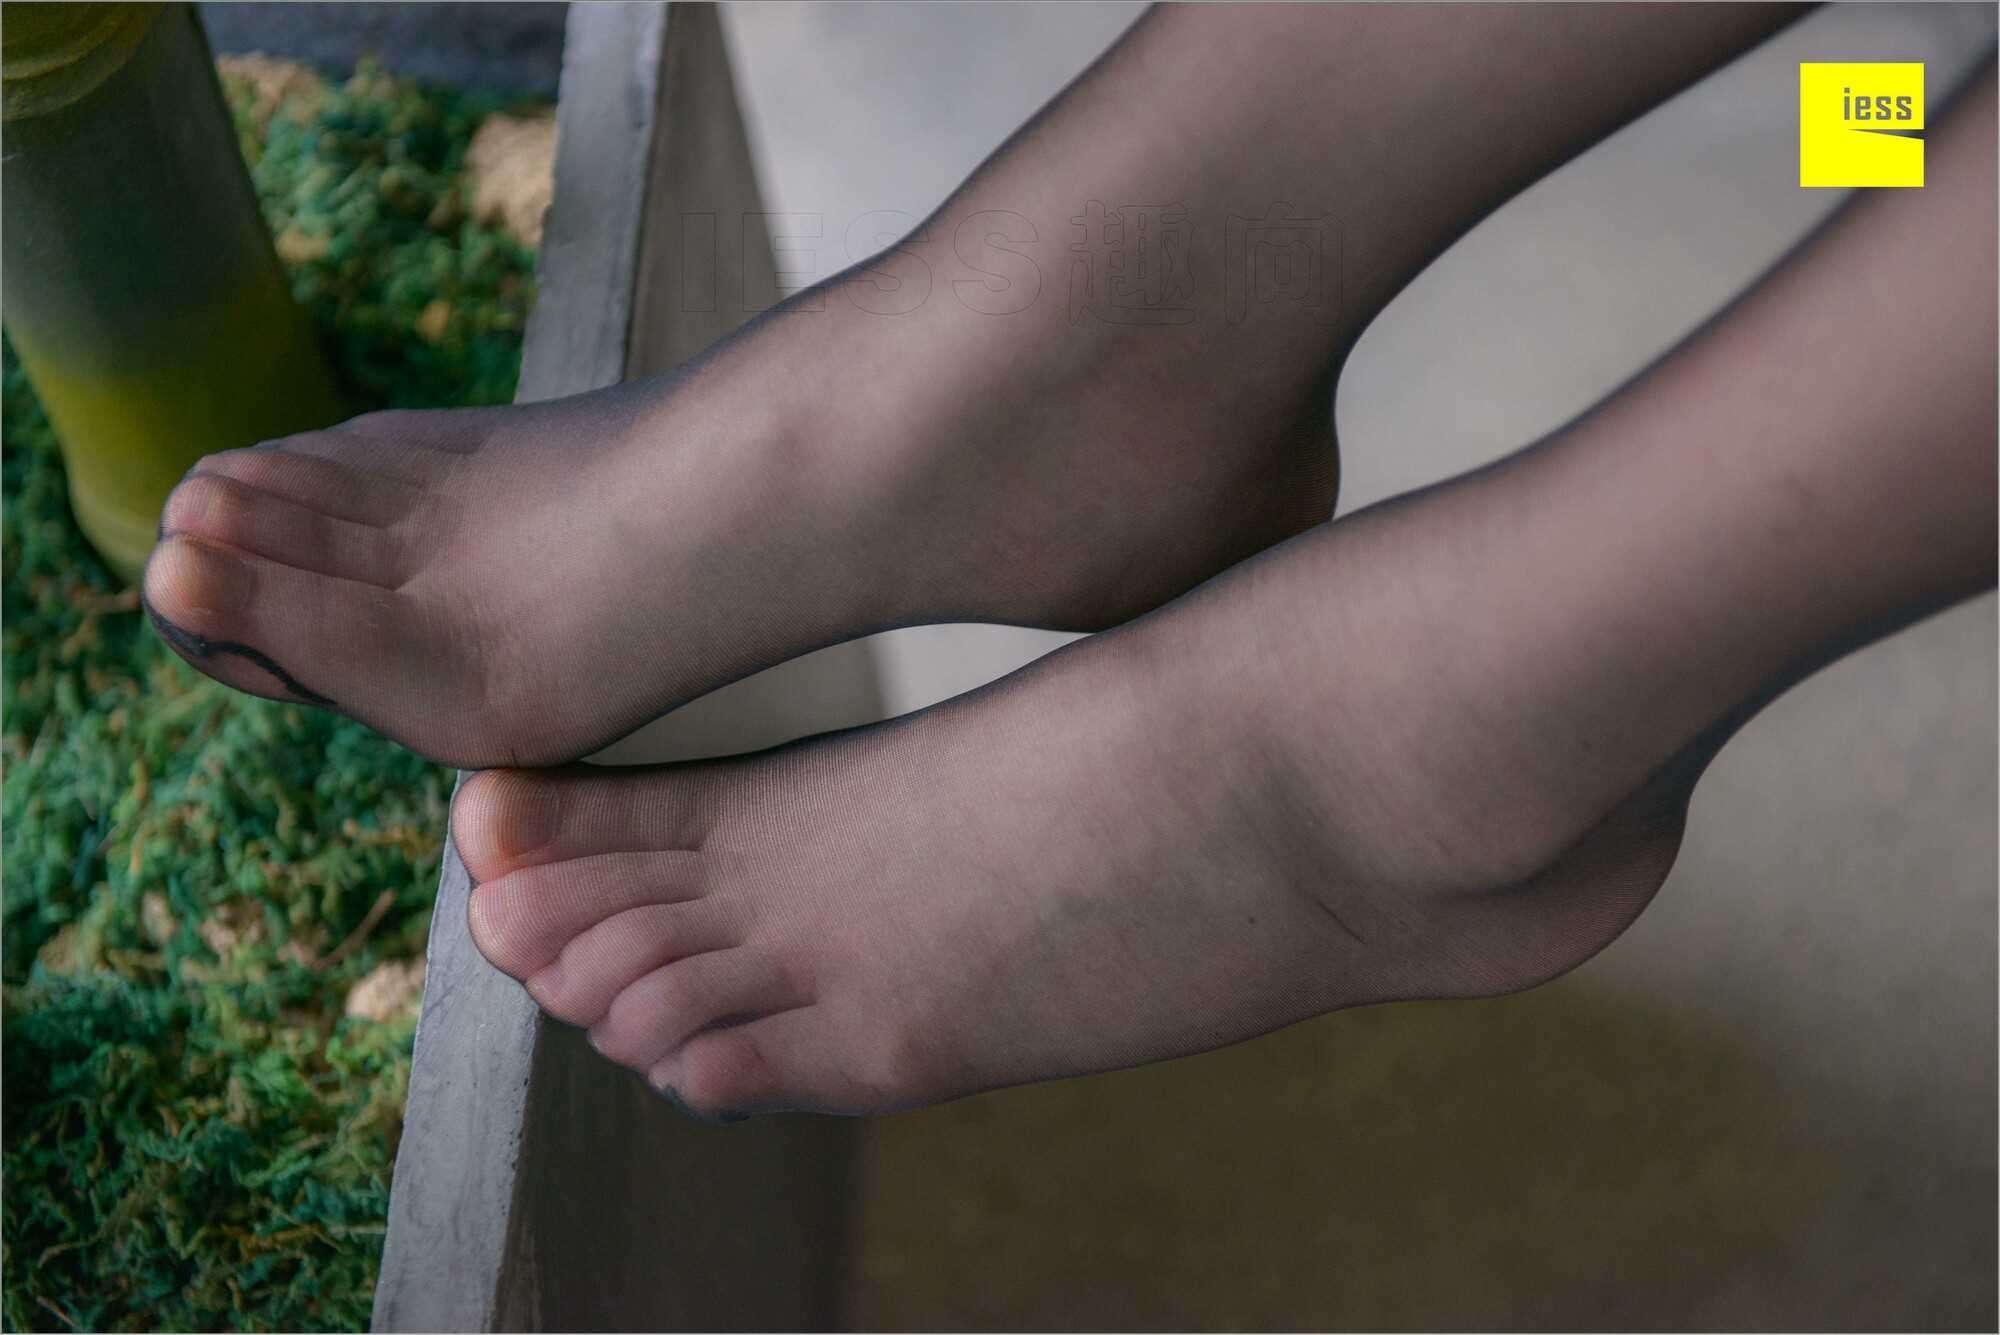 China Beauty Legs and feet 537